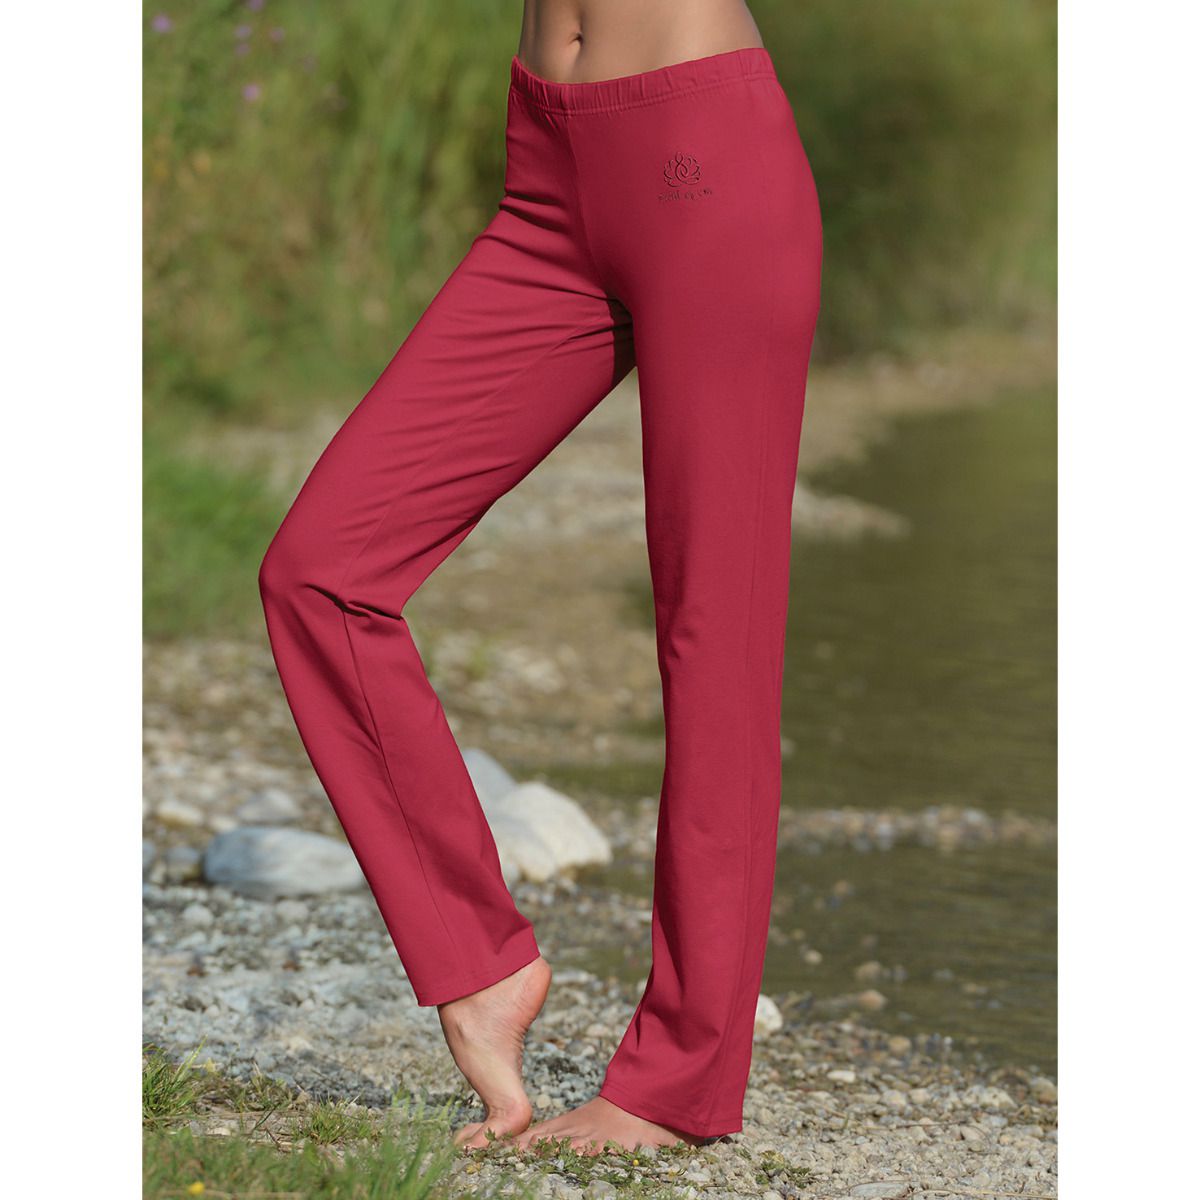 Yoga Pants Wellness roses red - The Spirit of OM - Yoga clothing brands -  Yoga clothing